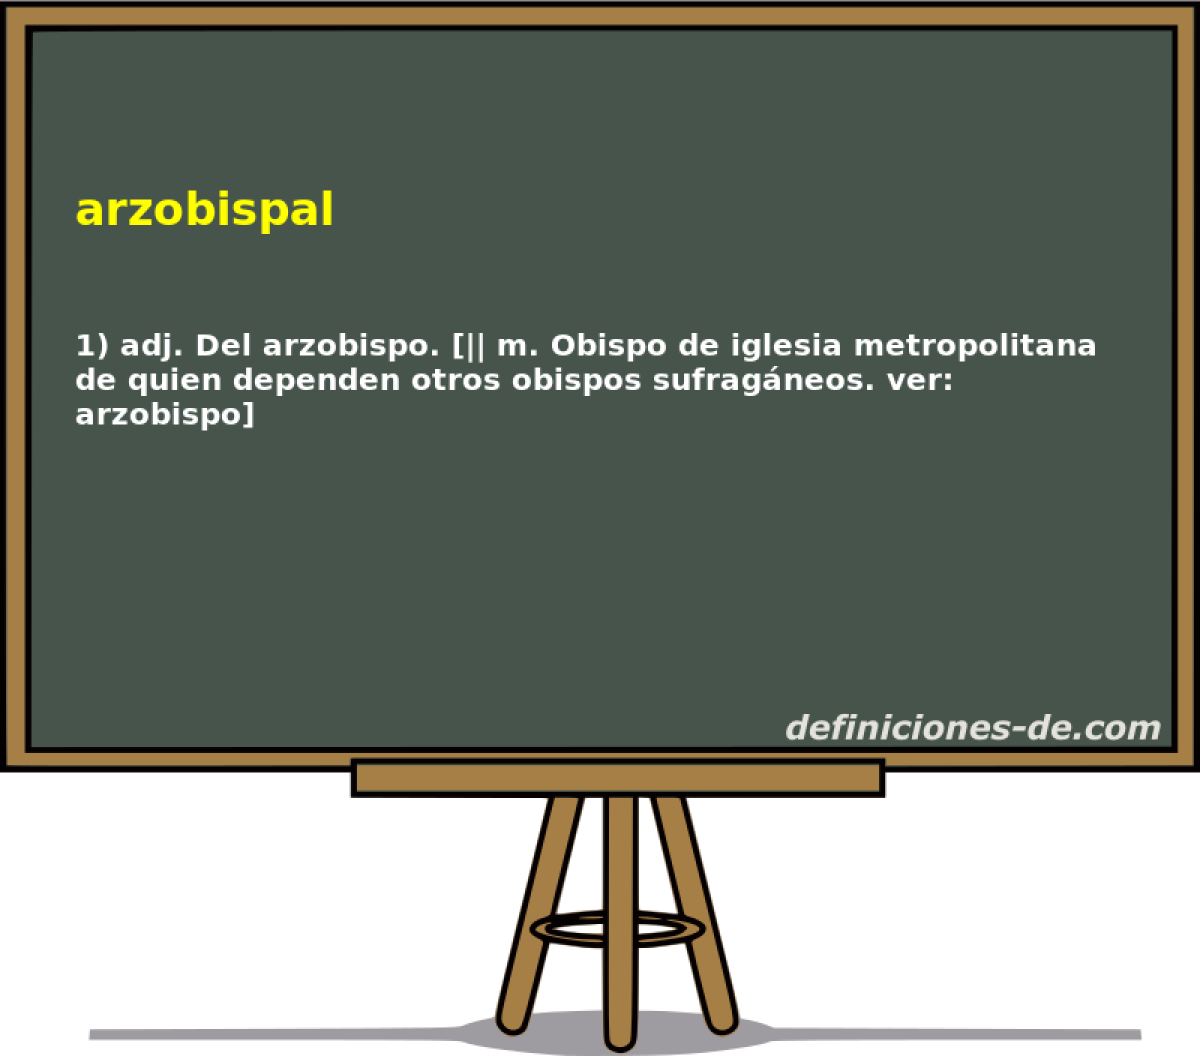 arzobispal 